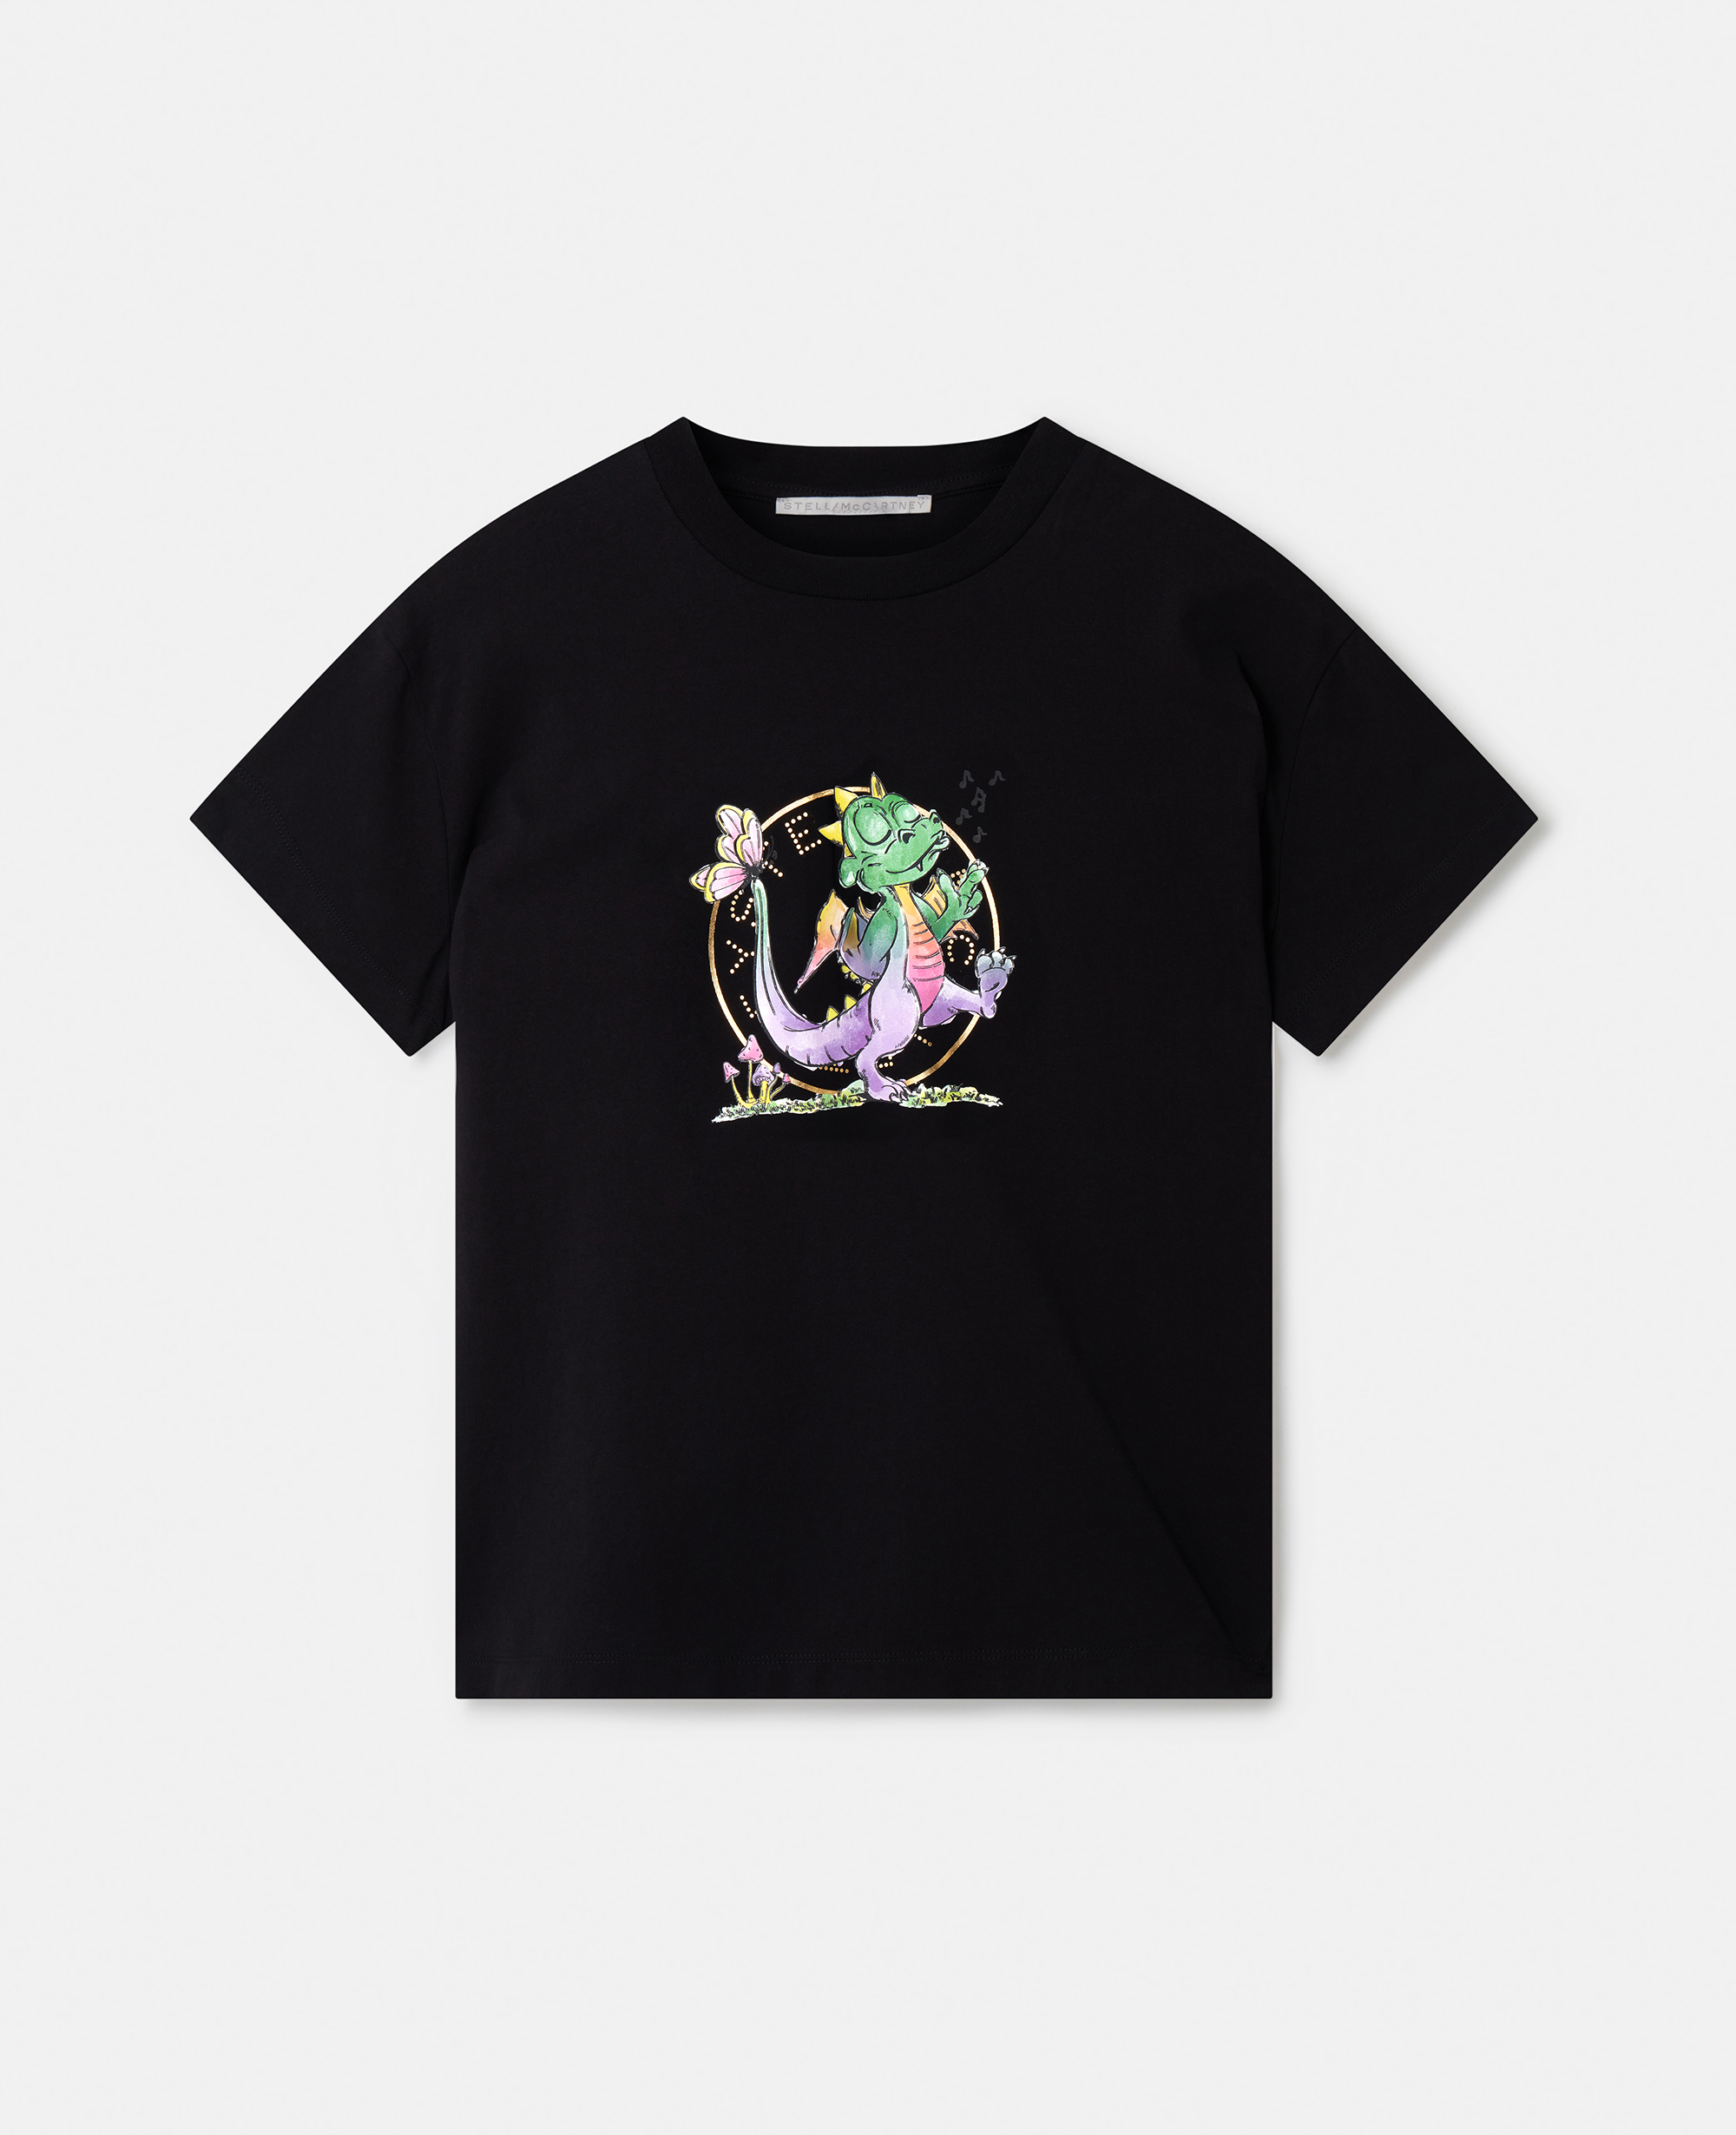 stella mccartney - year of the dragon print t-shirt, woman, black, size: xs